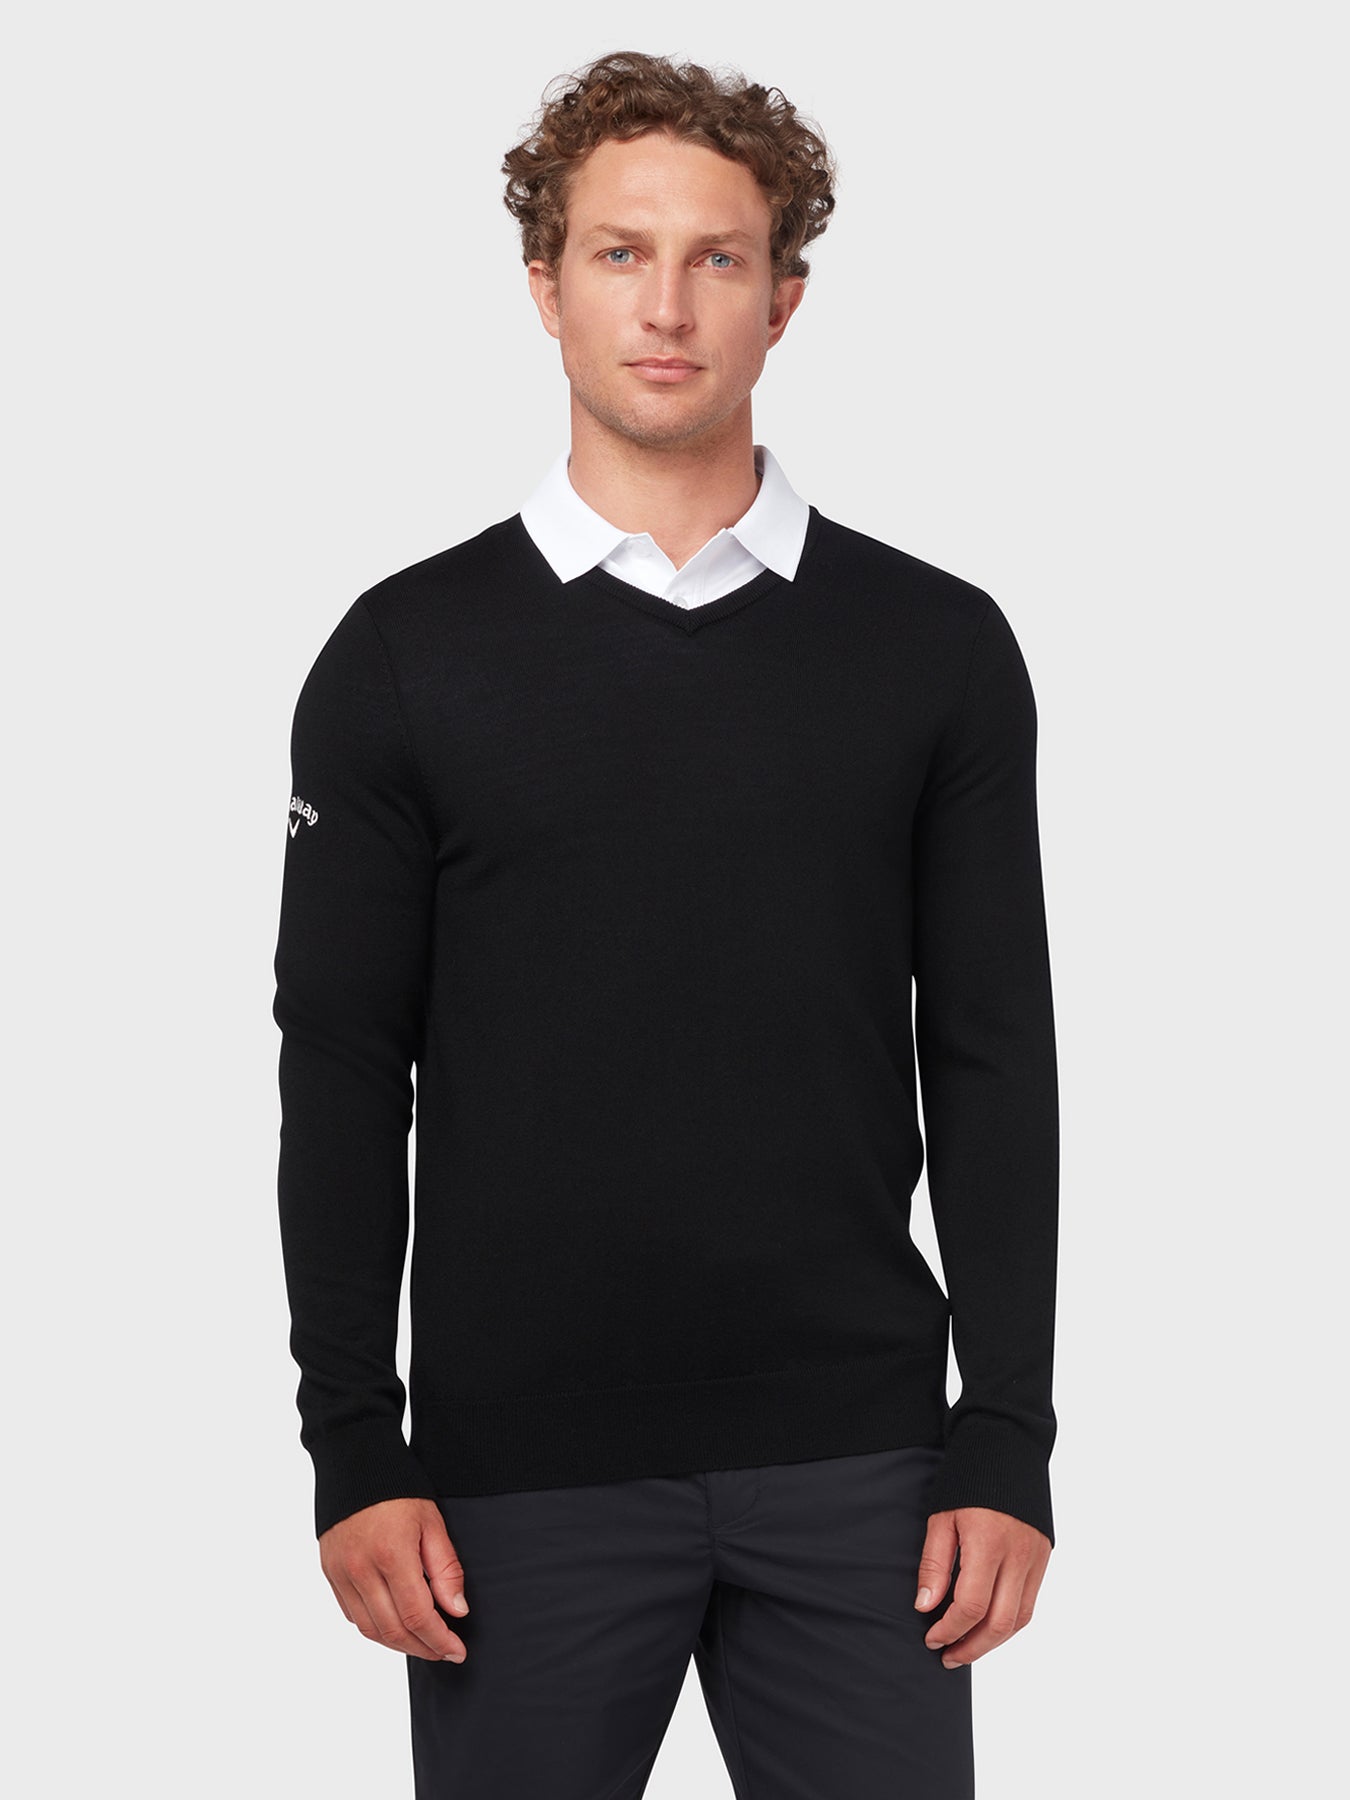 View Thermal Merino Wool VNeck Sweater In Black Onyx Black Onyx XL information